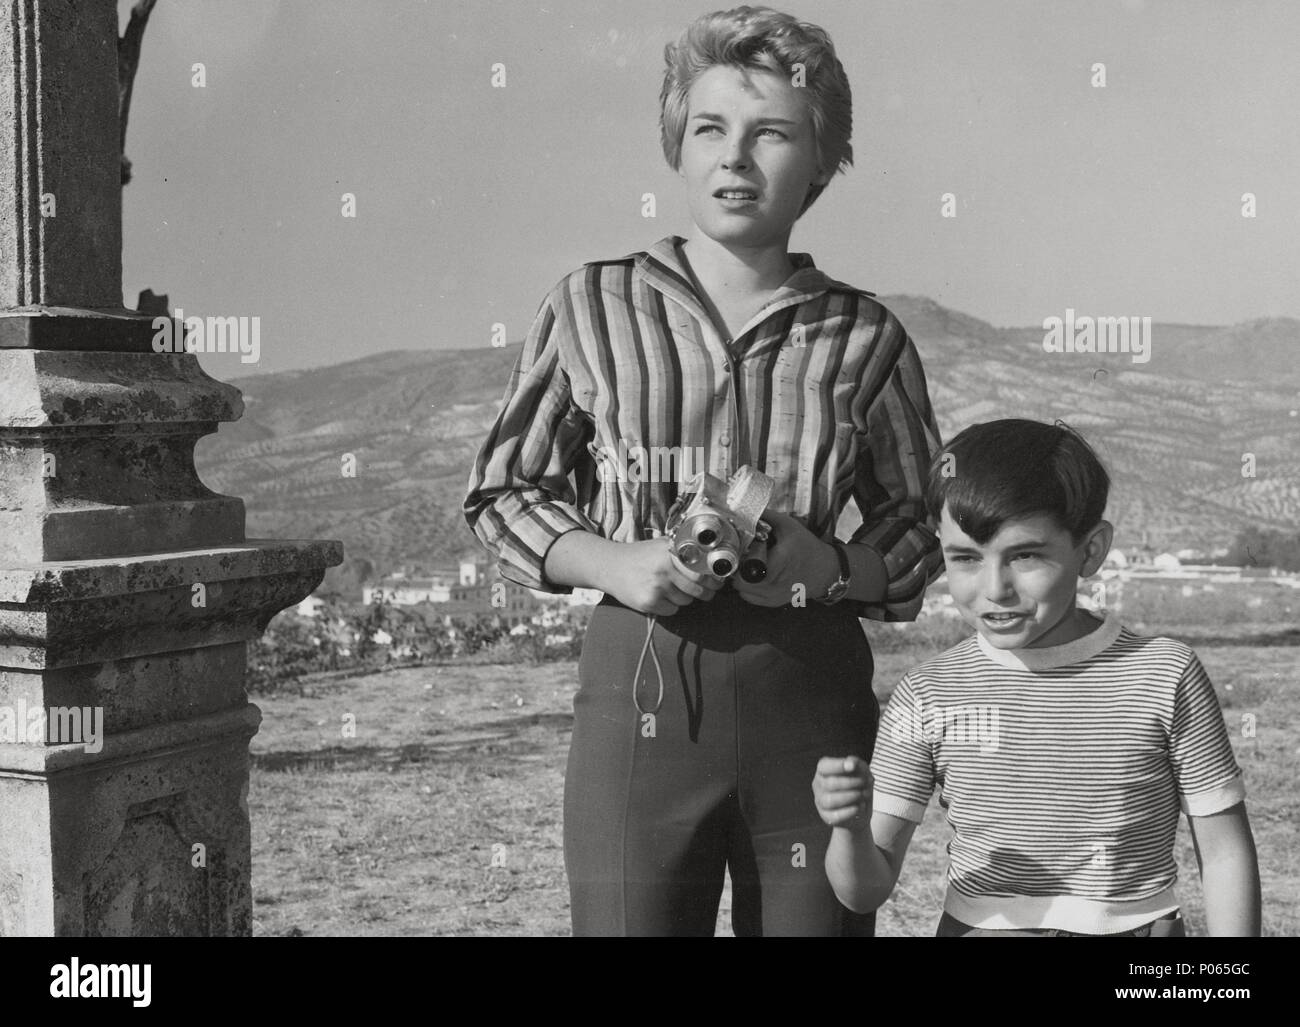 Original Film Title: EL RUISEÑOR DE LAS CUMBRES.  English Title: EL RUISEÑOR DE LAS CUMBRES.  Film Director: ANTONIO DEL AMO.  Year: 1958.  Stars: LOLA VILLAESPESA; JOSELITO. Credit: SUEVIA FILMS / Album Stock Photo